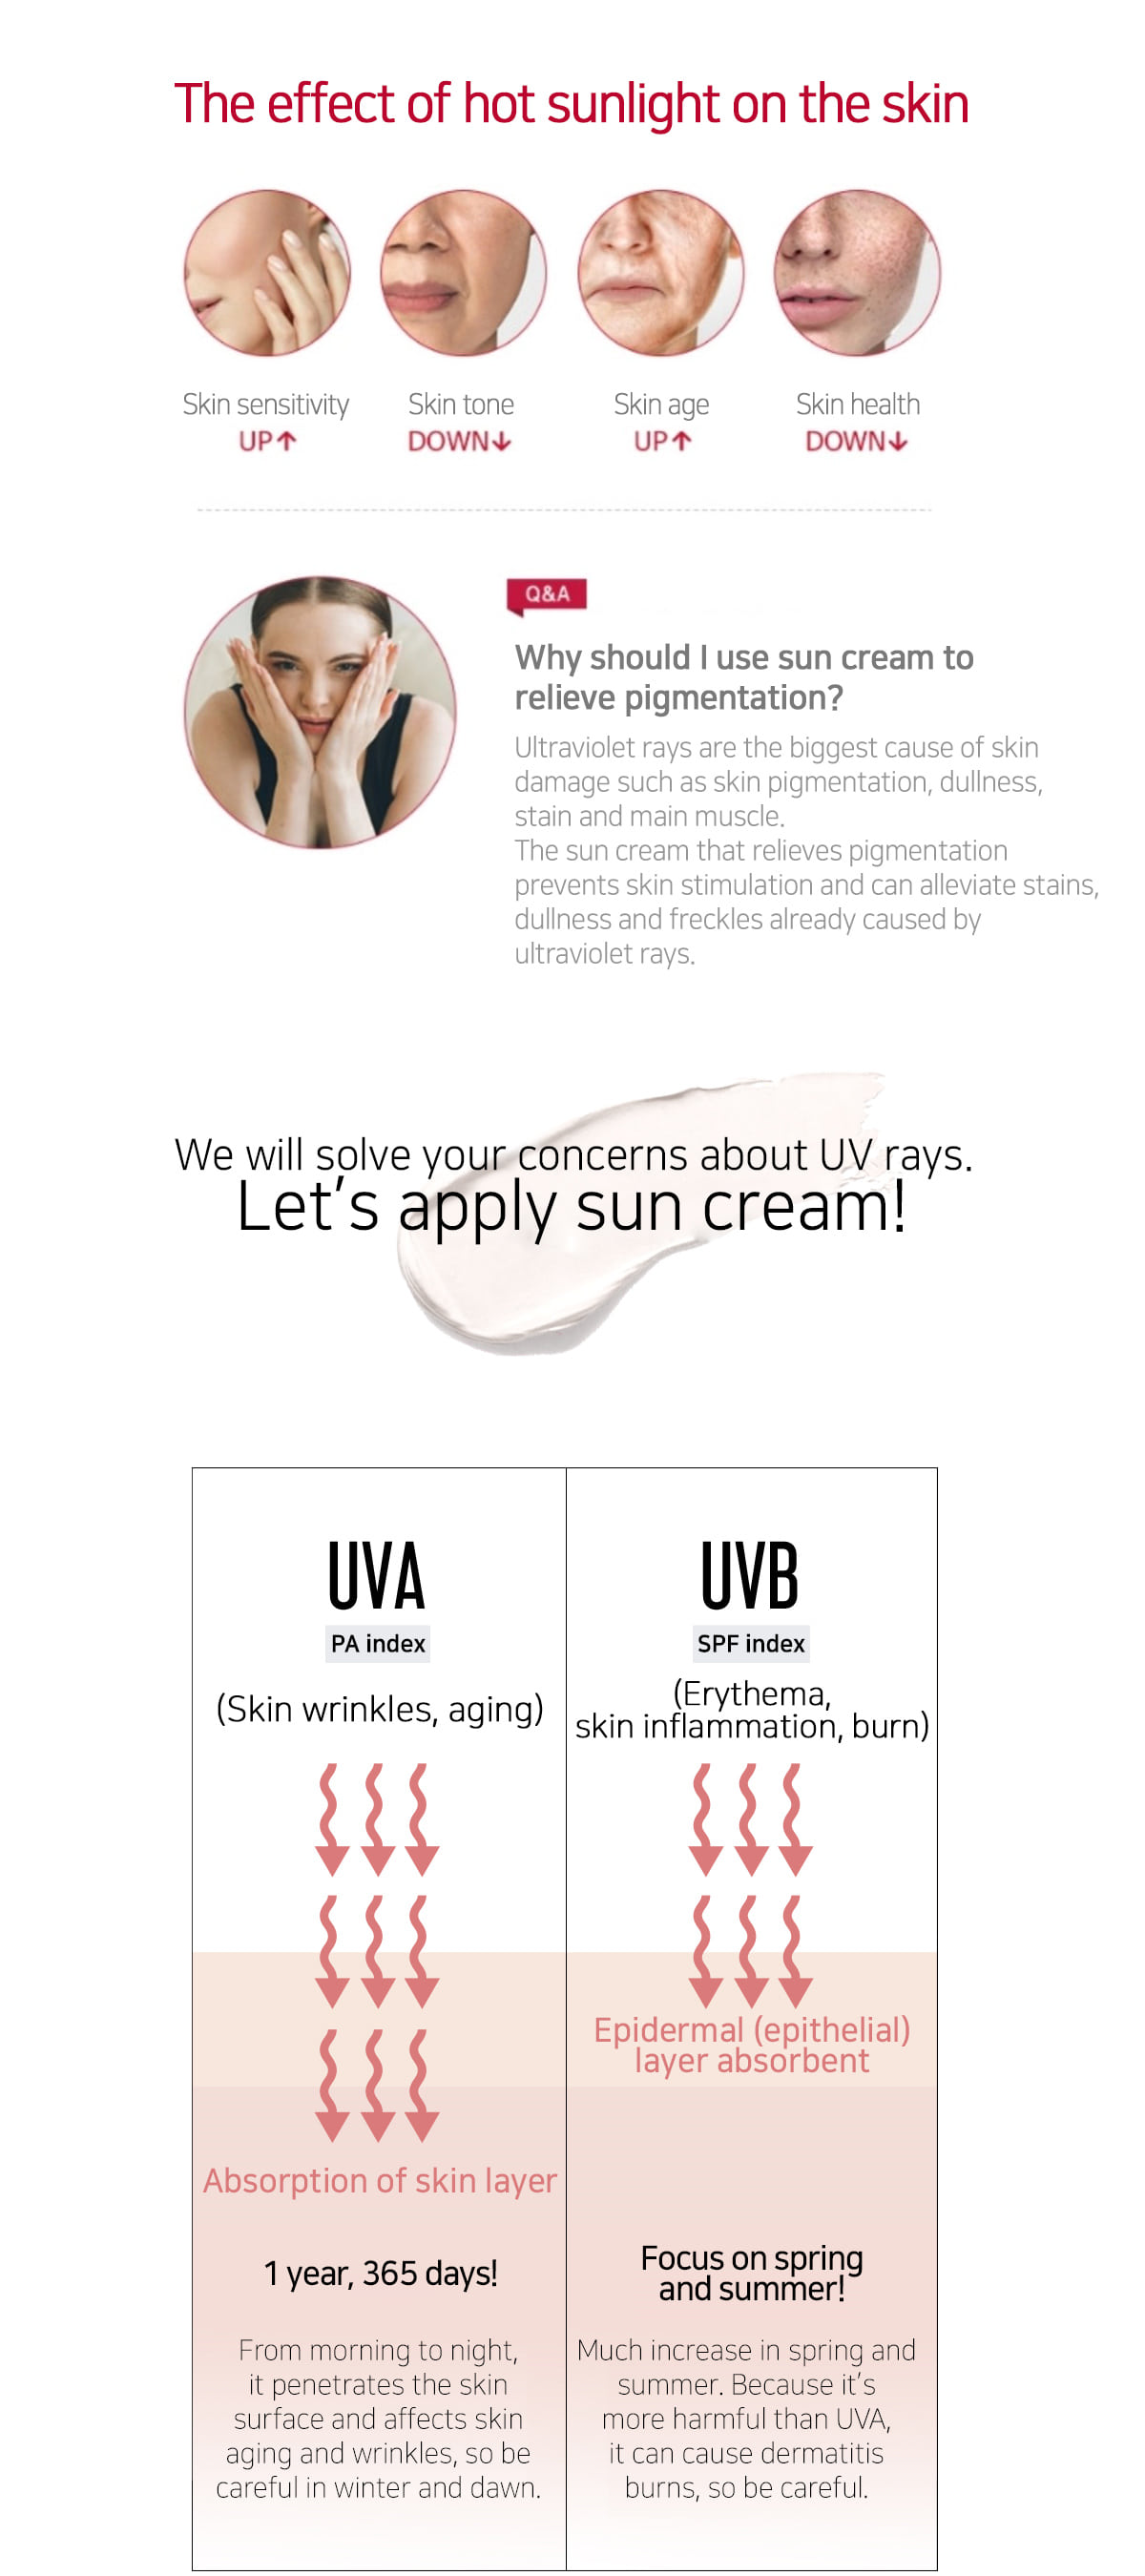 UV Perfect Sun Cream 30ml * 3 Sunscreen  UV protection